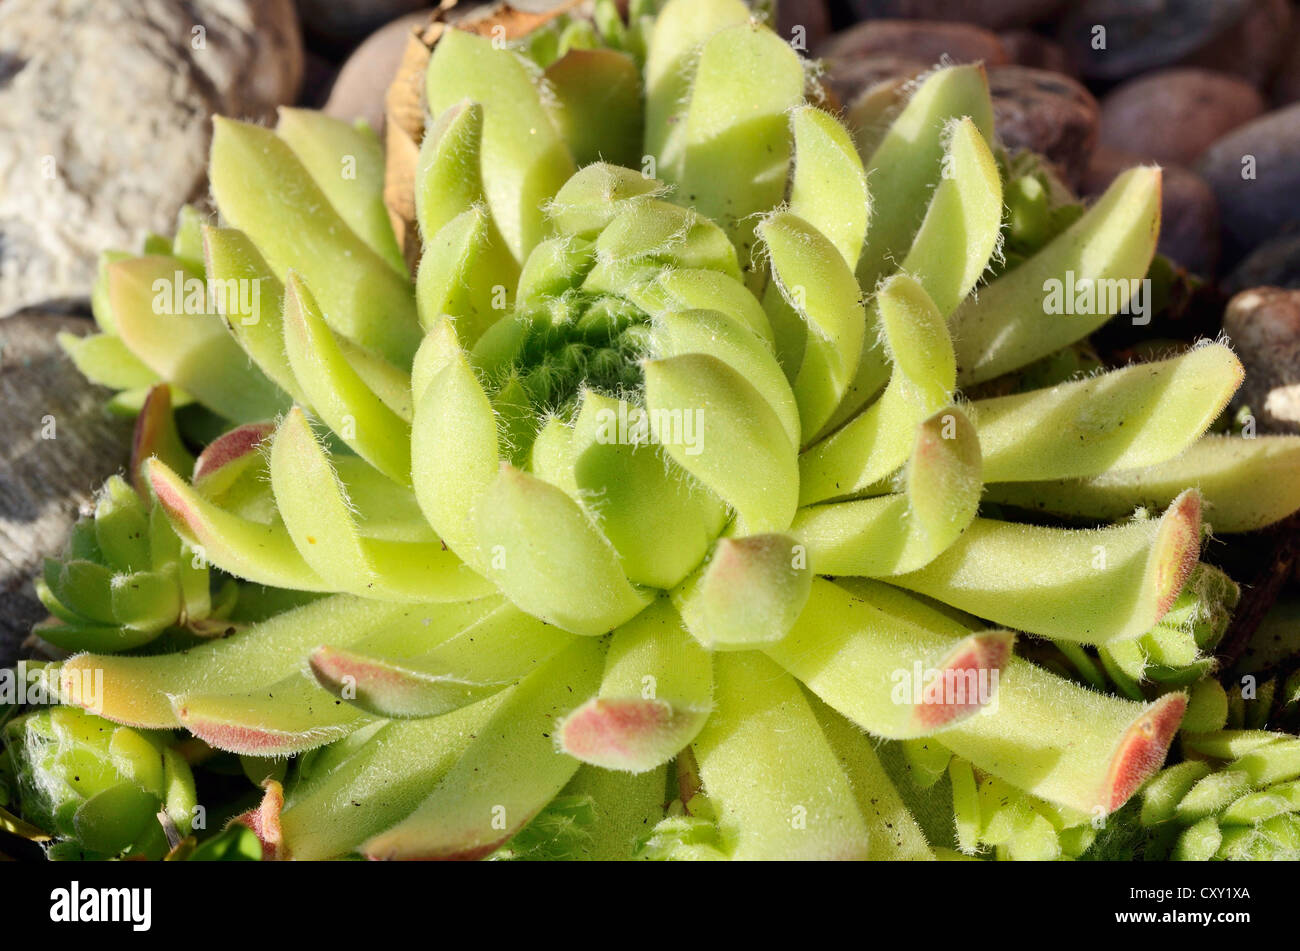 Echeveria species (Echeveria minima), succulent plant with hairy leaves Stock Photo